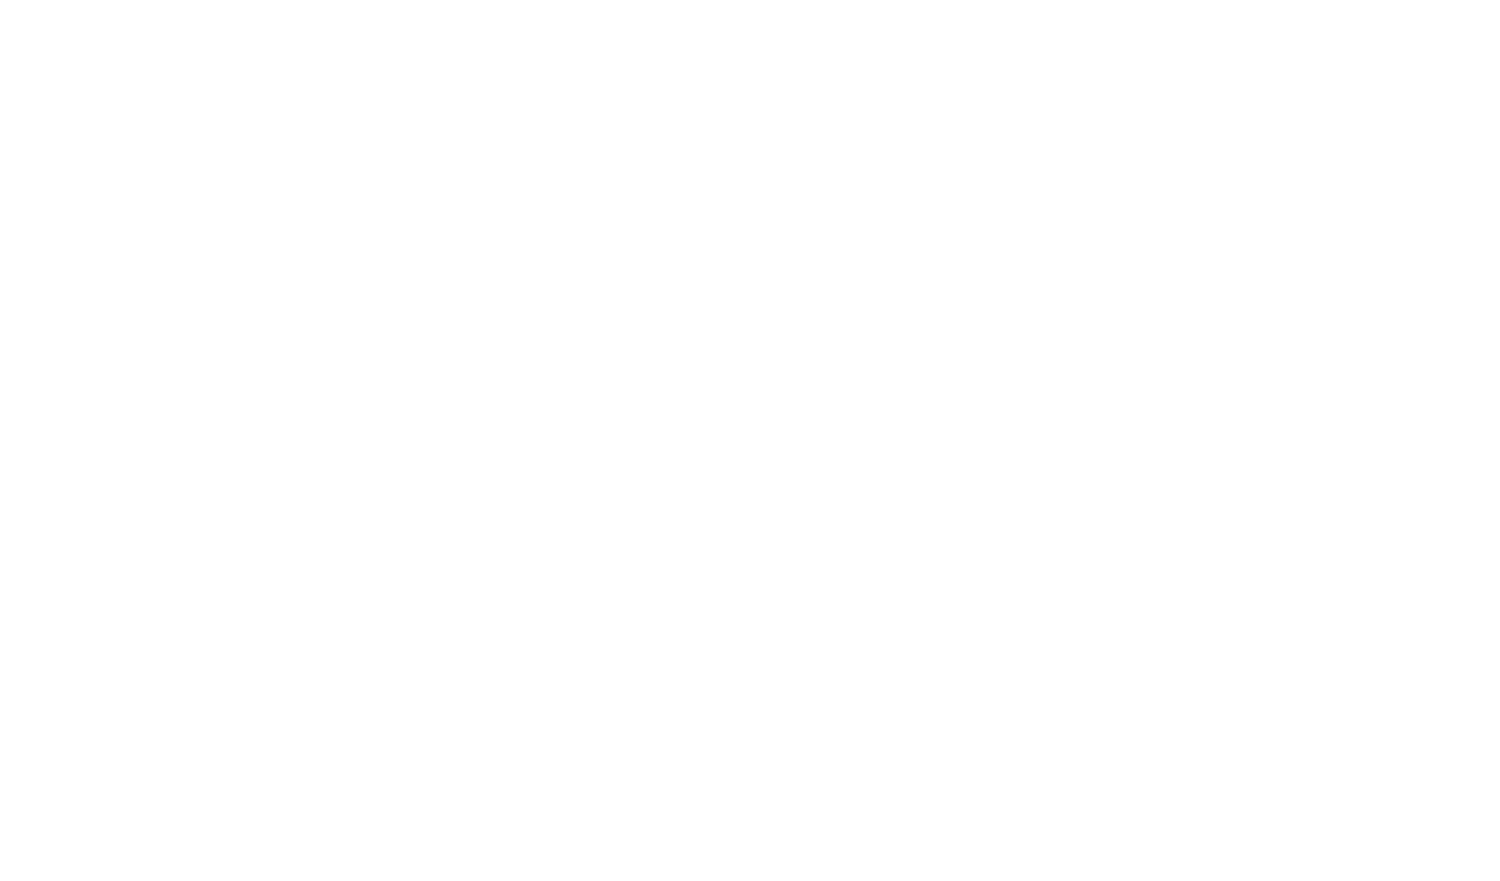 Infertility Counseling Center of Jacksonville